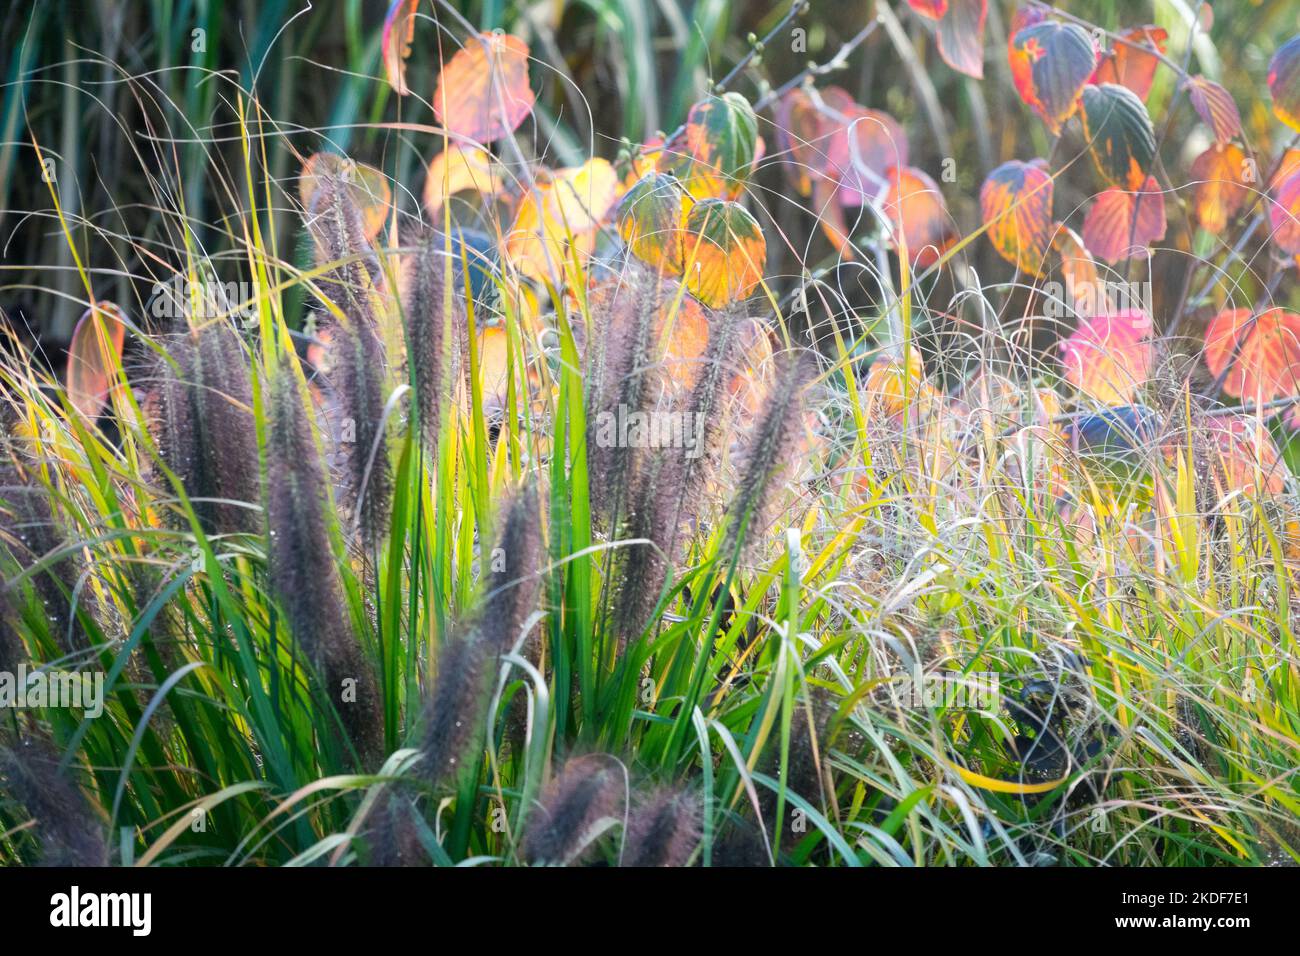 Garden, Grasses, Flowers, Autumn, Fountain Grass, Clumps of Pennisetum 'Black Beauty', Pennisetum alopecuroides, Plant Ornamental grasses flower beds Stock Photo